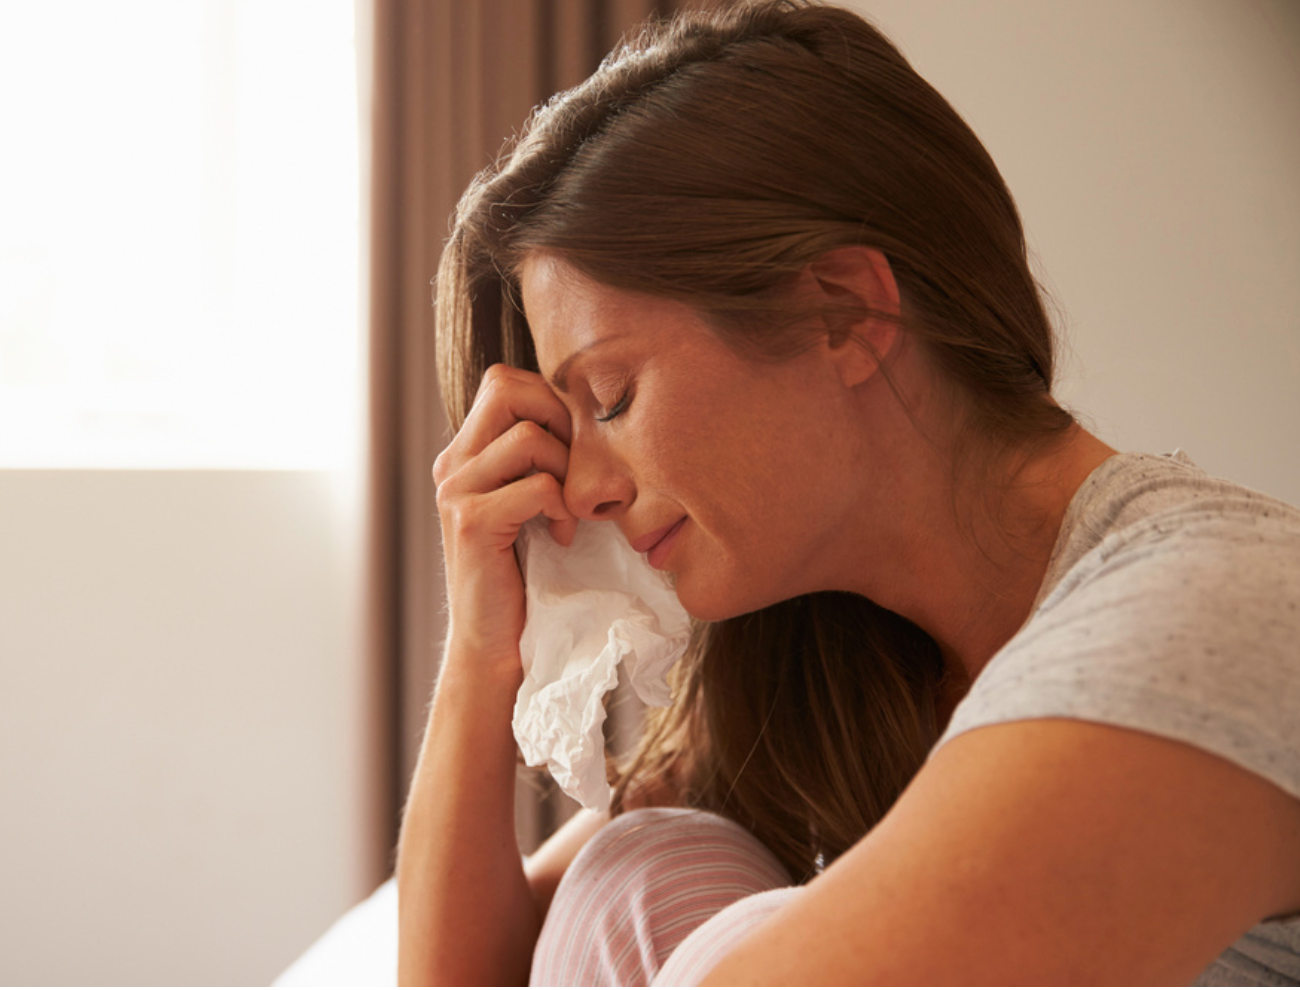 FDA to Evaluate Zuranolone for Major Depressive Disorder, Postpartum Depression